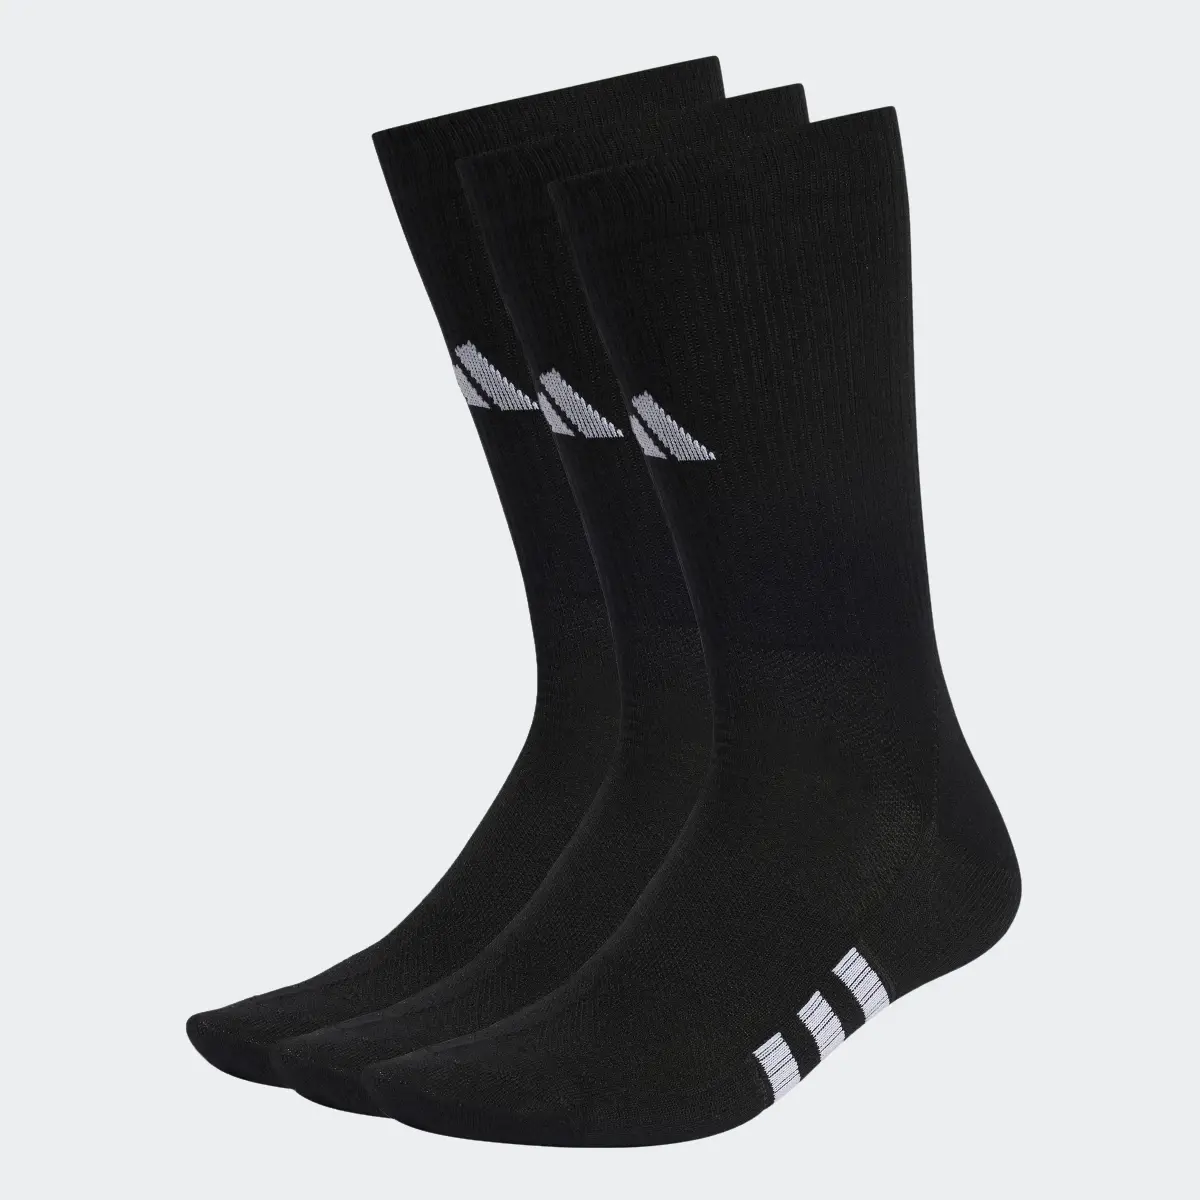 Adidas Performance Light Crew Socks 3 Pairs. 2